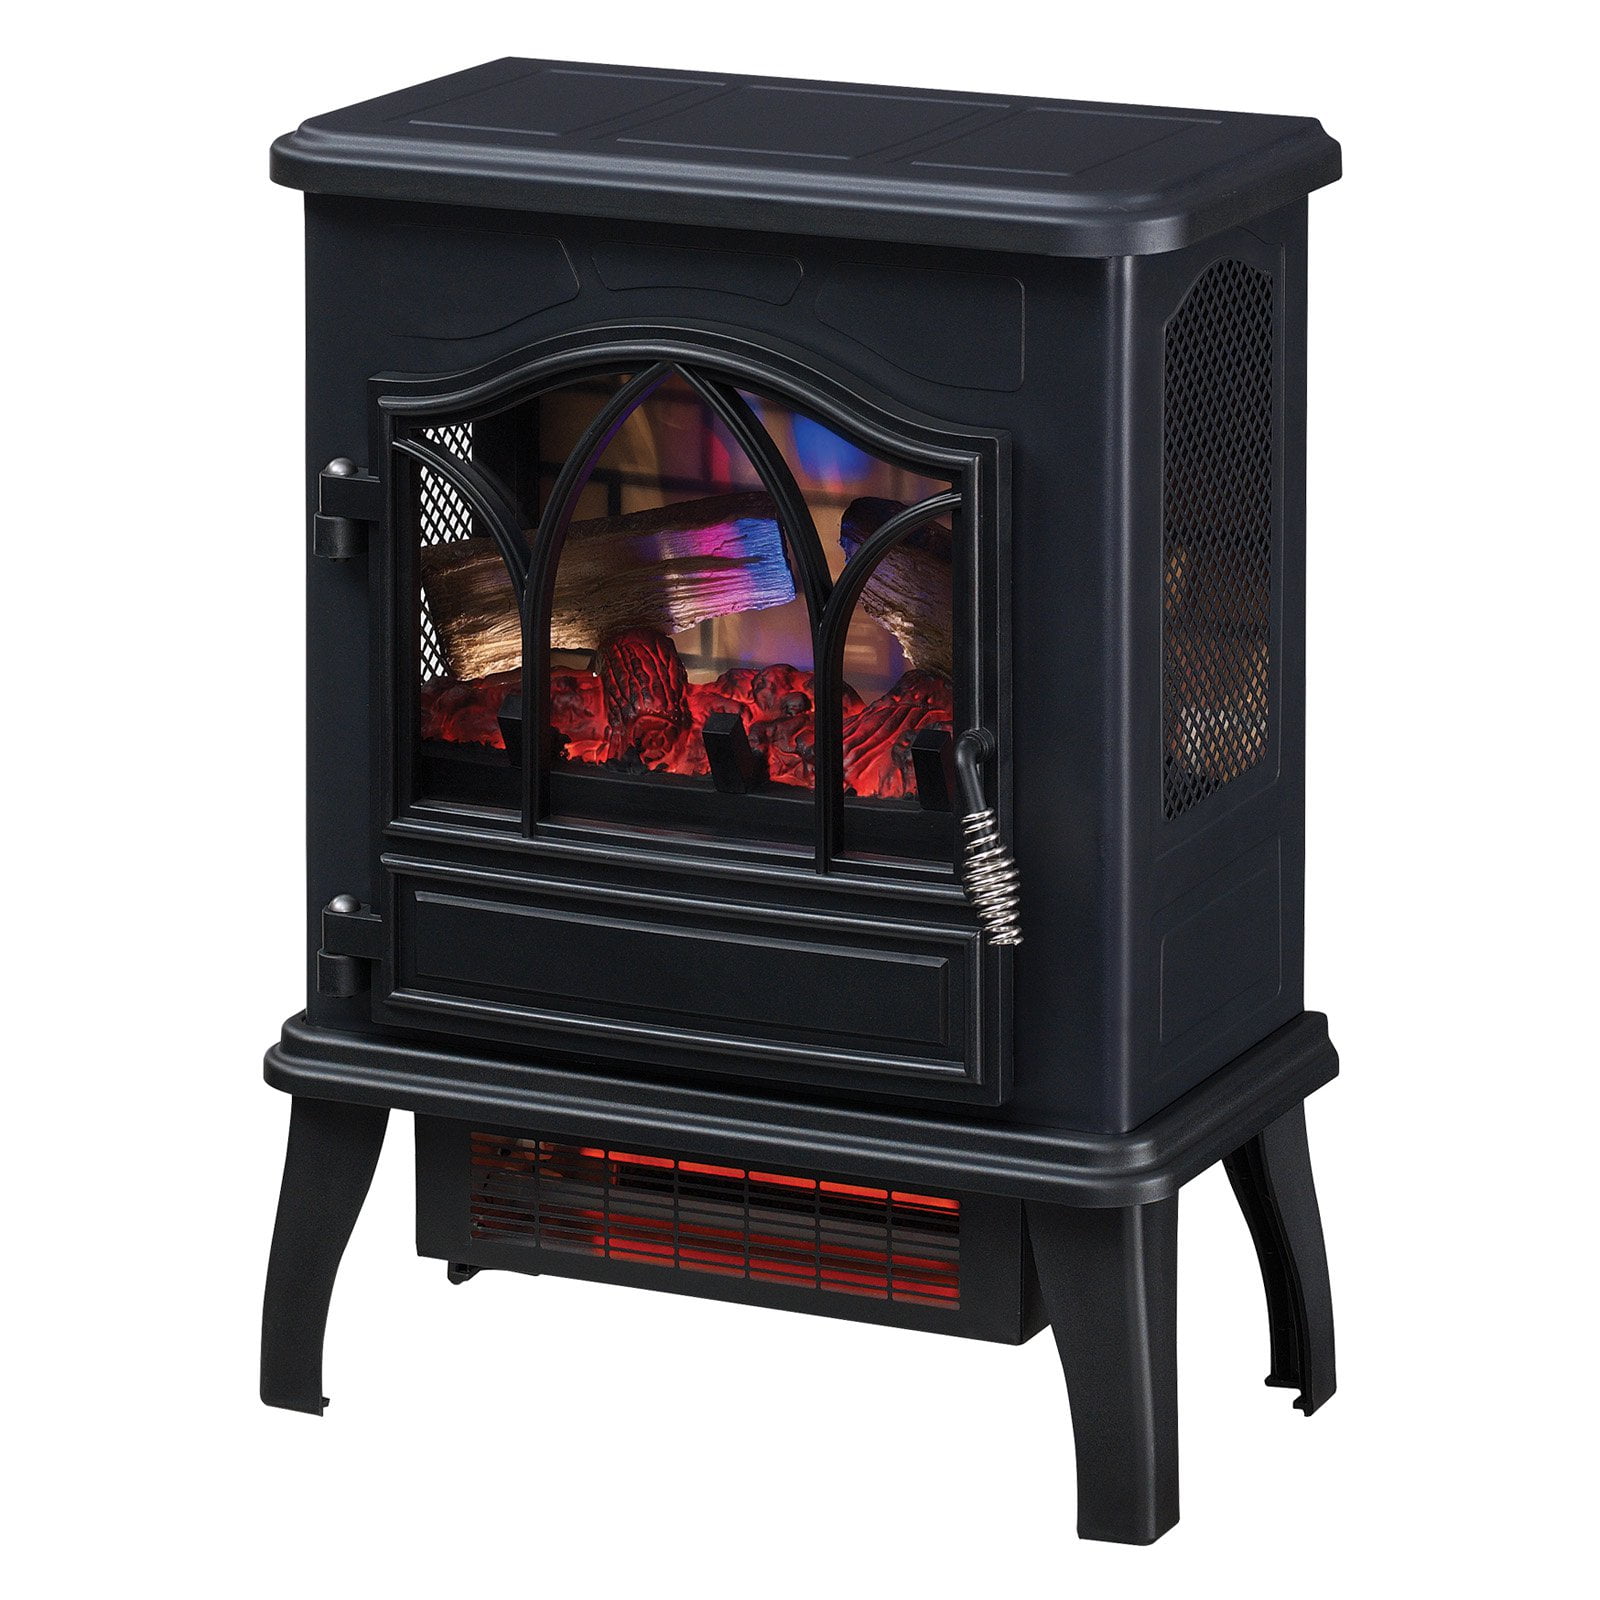 Black Duraflame DFI-470-04 Infrared Quartz Fireplace Stove 